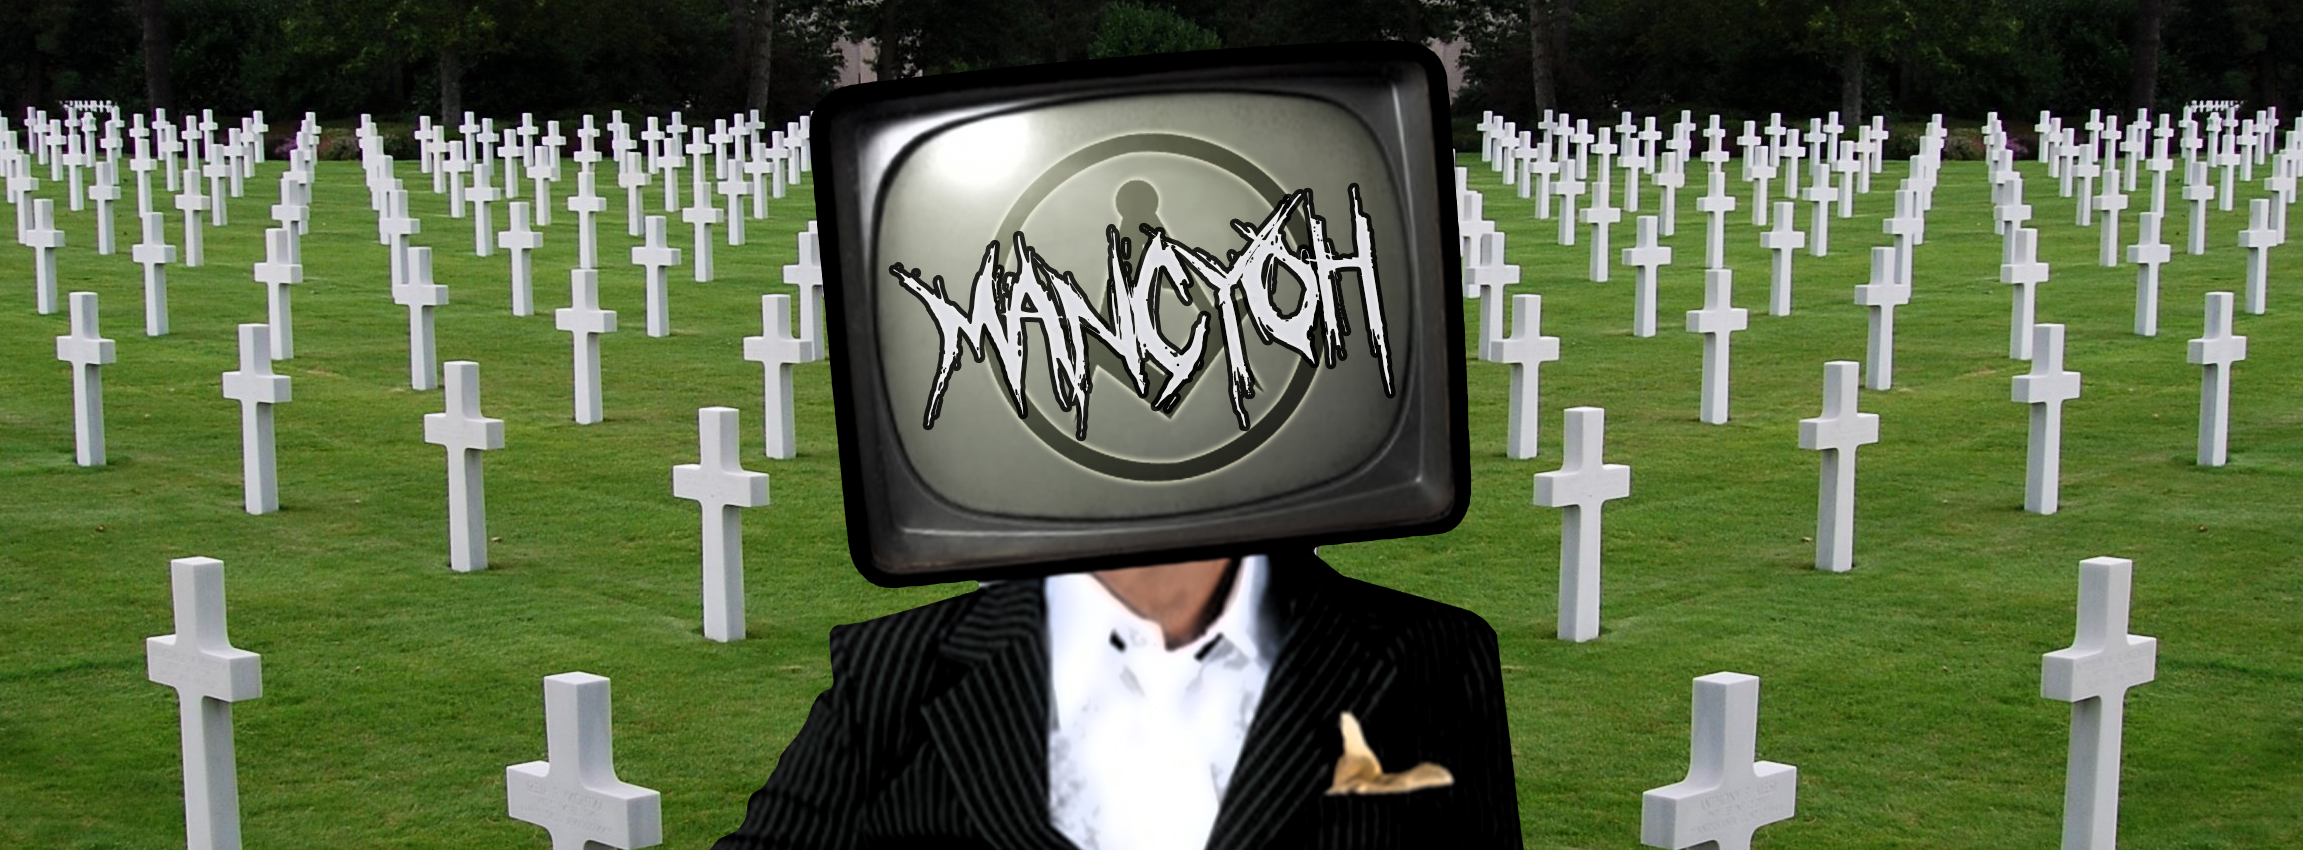 mancyoh